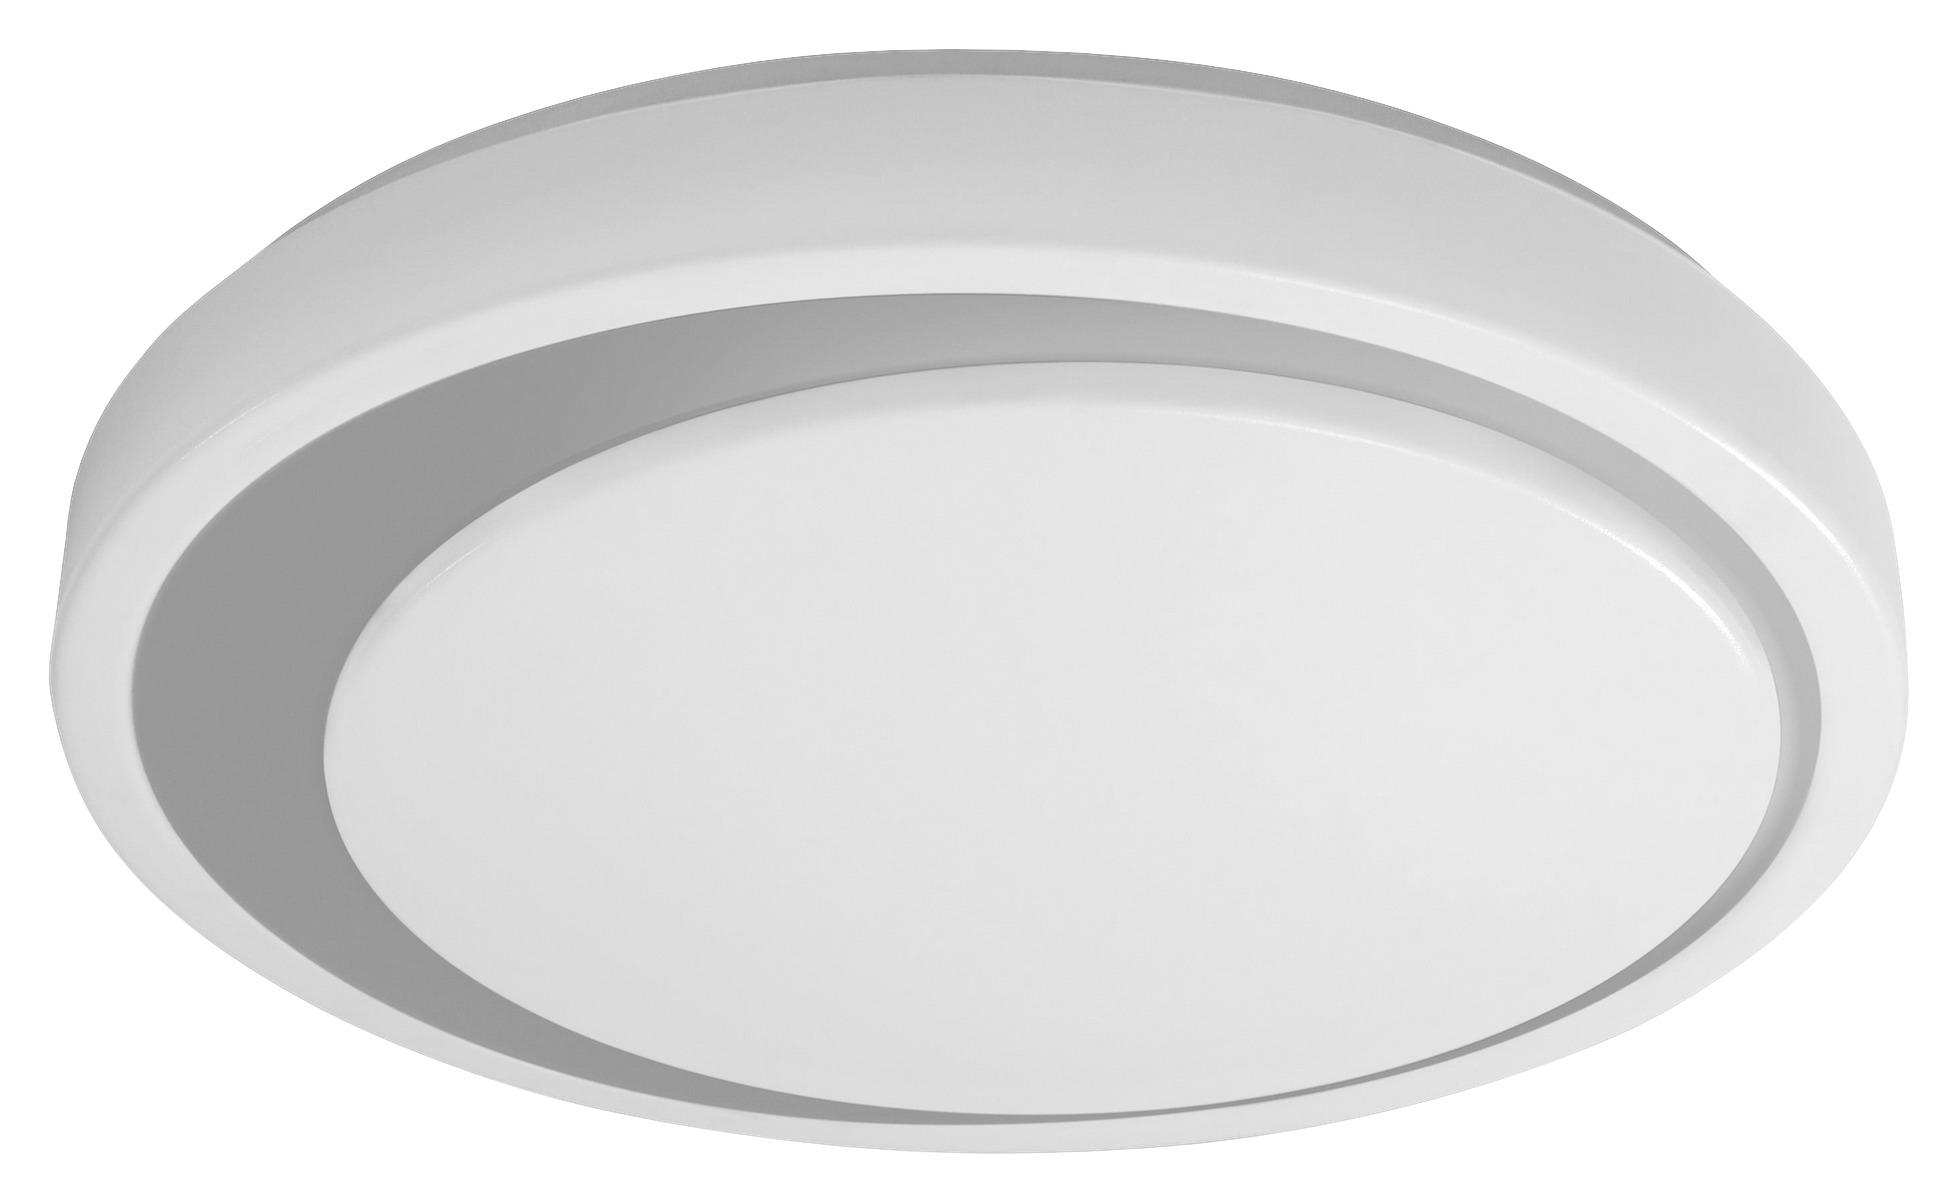 DECKENLEUCHTE 48/8,6 cm    - Grau, Basics, Kunststoff (48/8,6cm) - Ledvance